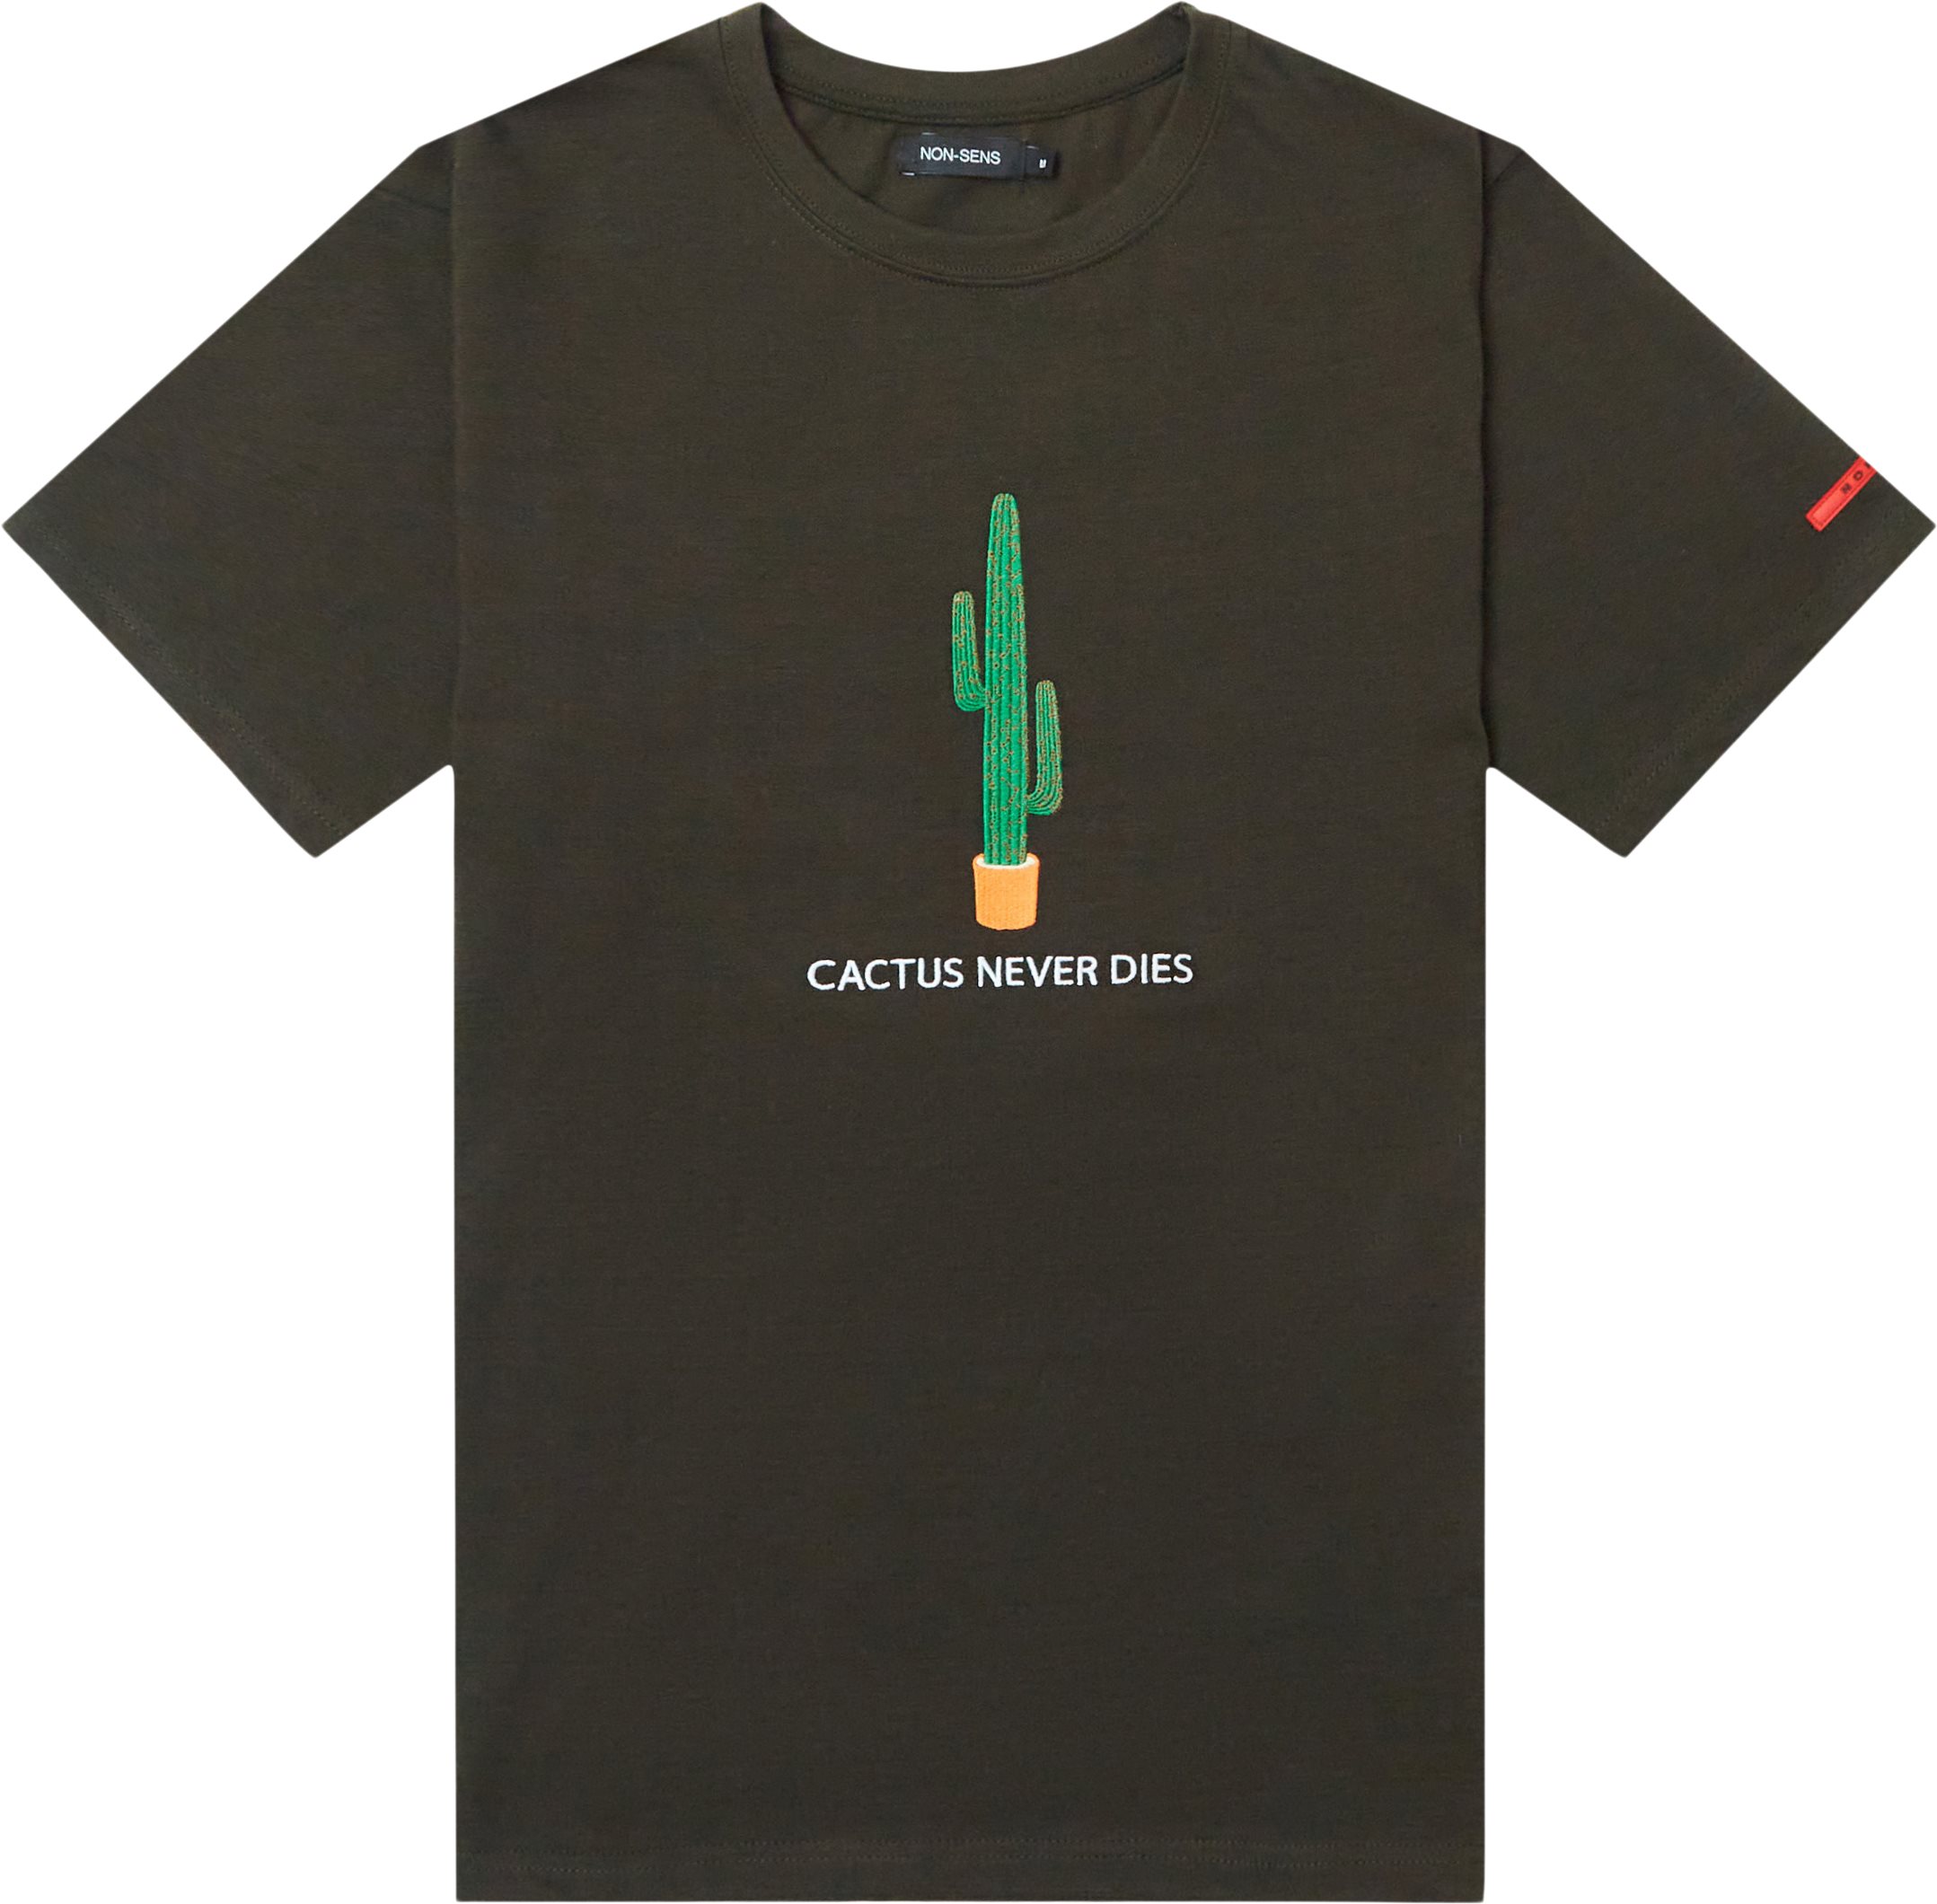 Cactus Tee - T-shirts - Regular fit - Army